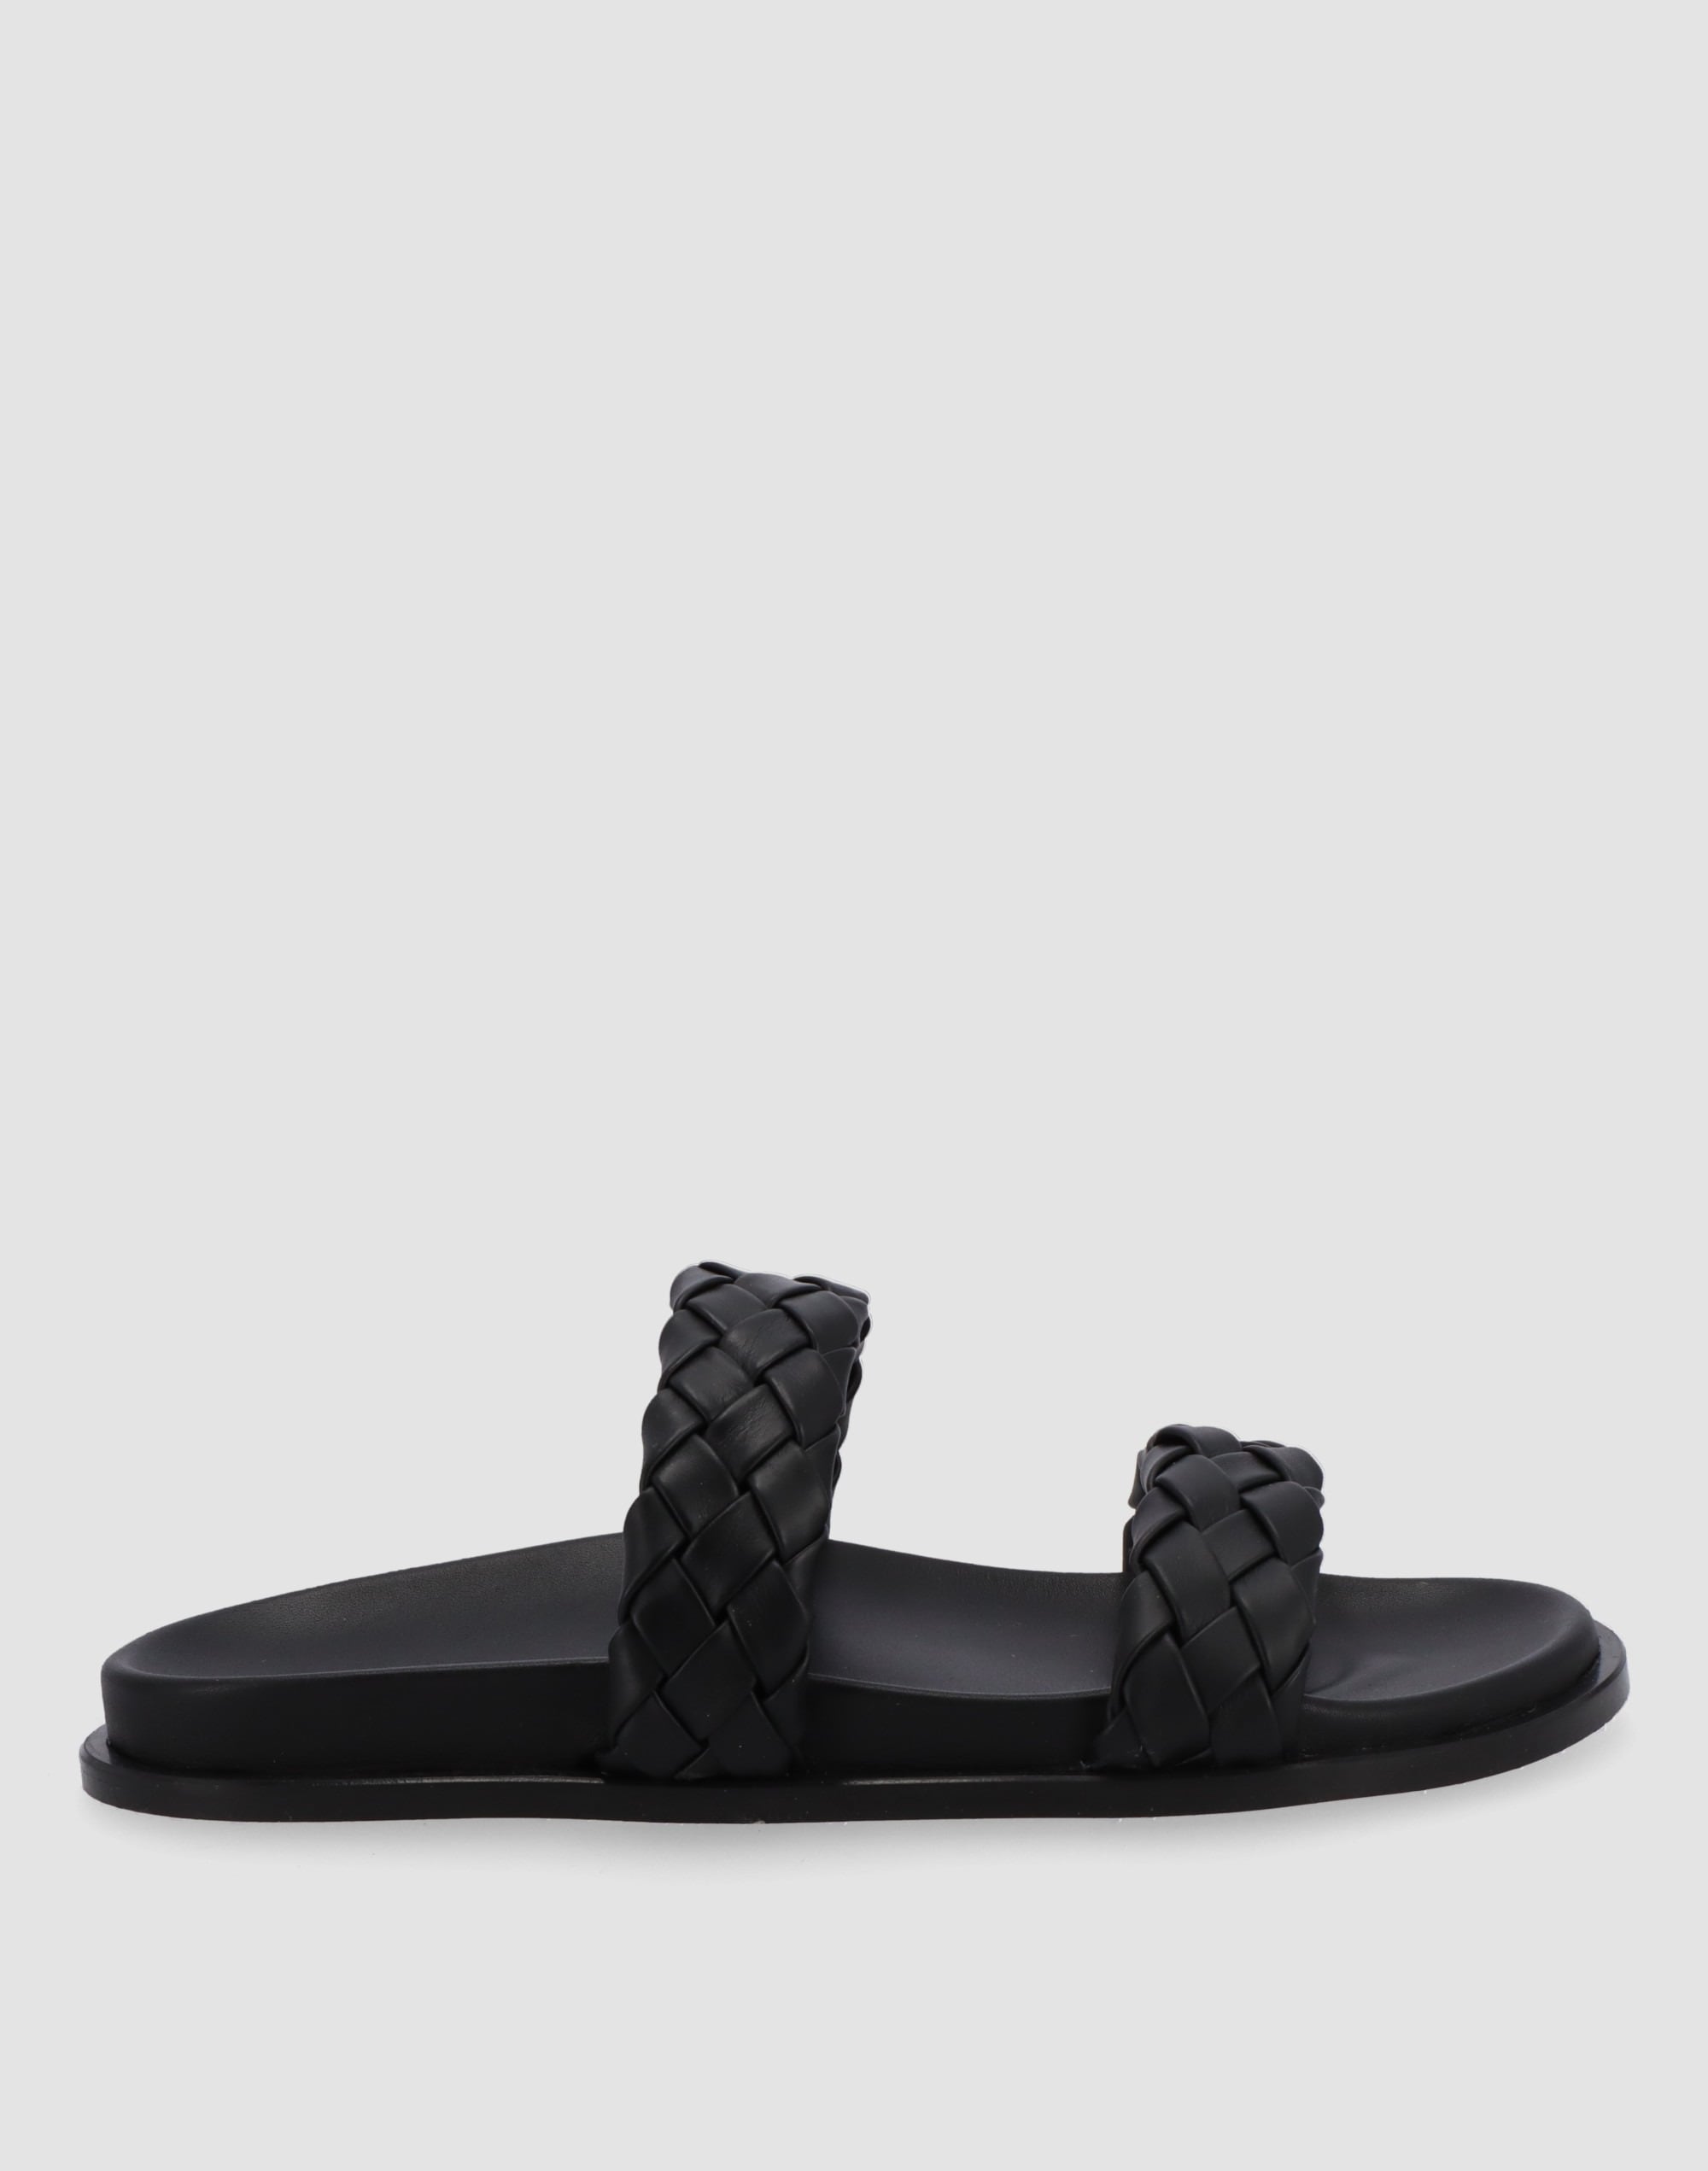 ALOHAS Calypso Braided Leather Sandals | Madewell